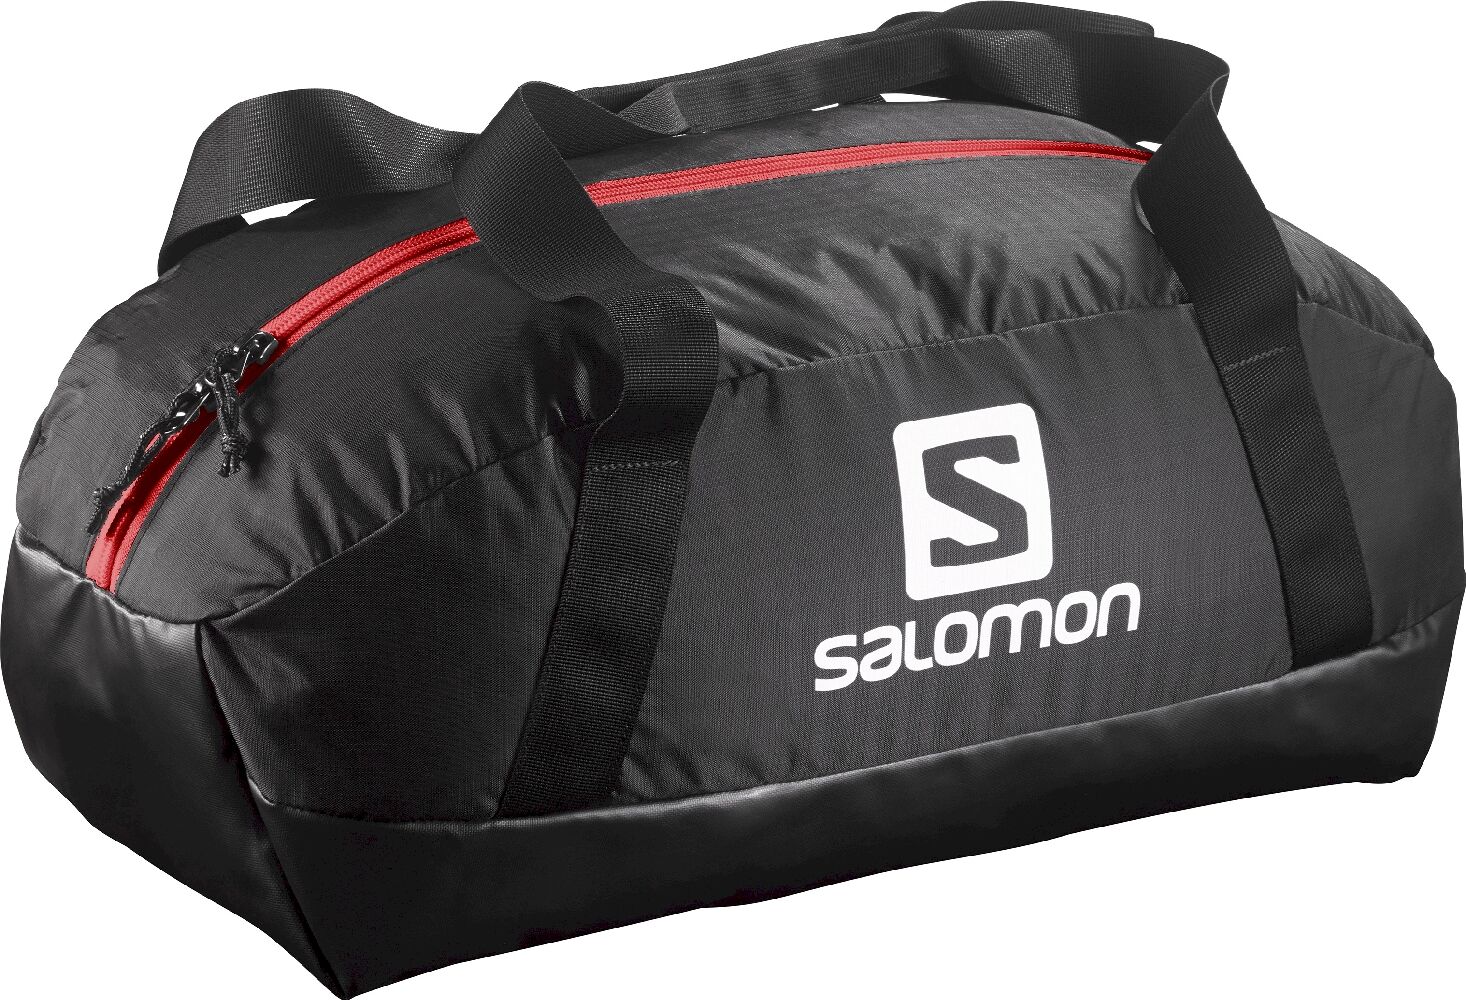 Salomon - Prolog 25 Bag - Travel bag